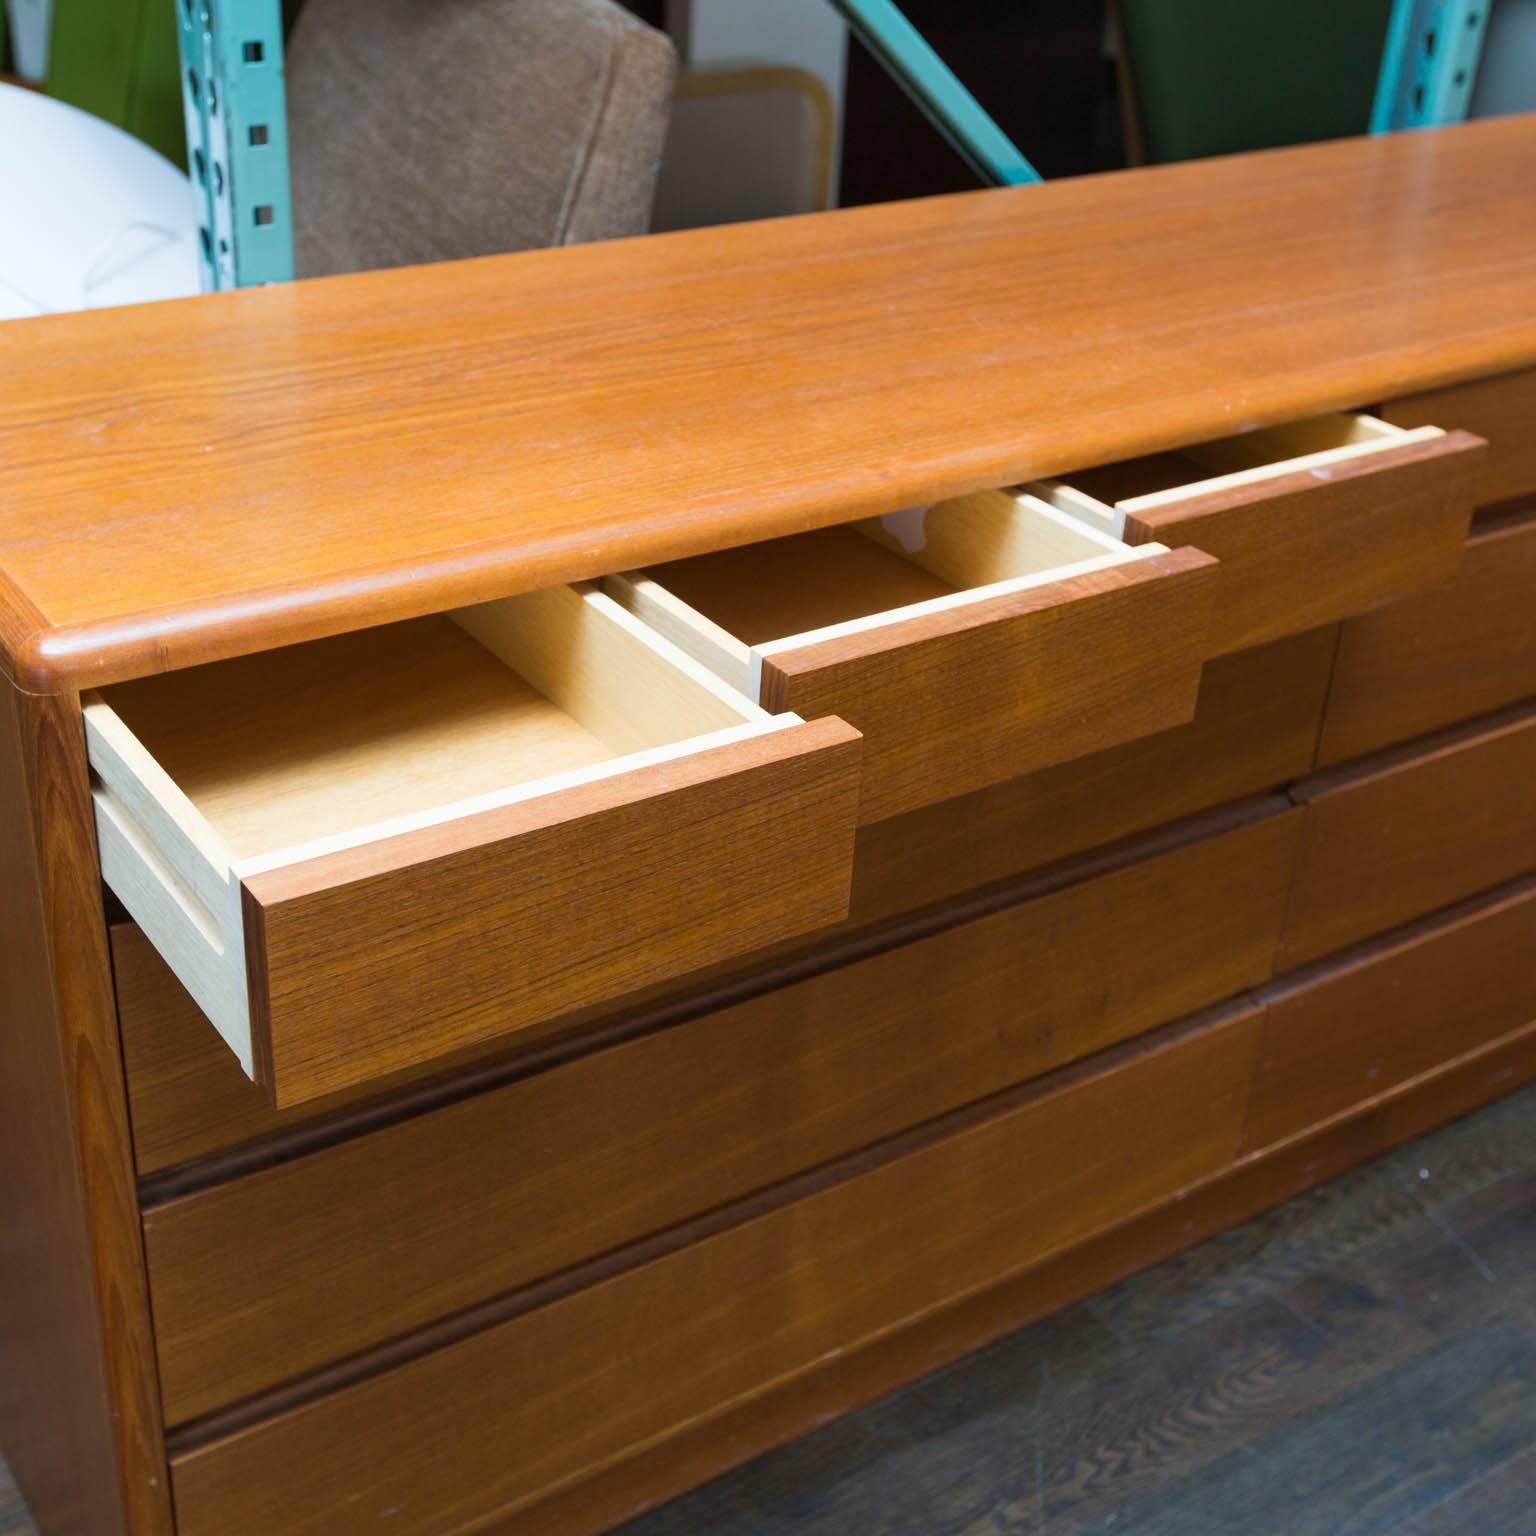 Nice clean Ten-drawer chest by George Petersens.